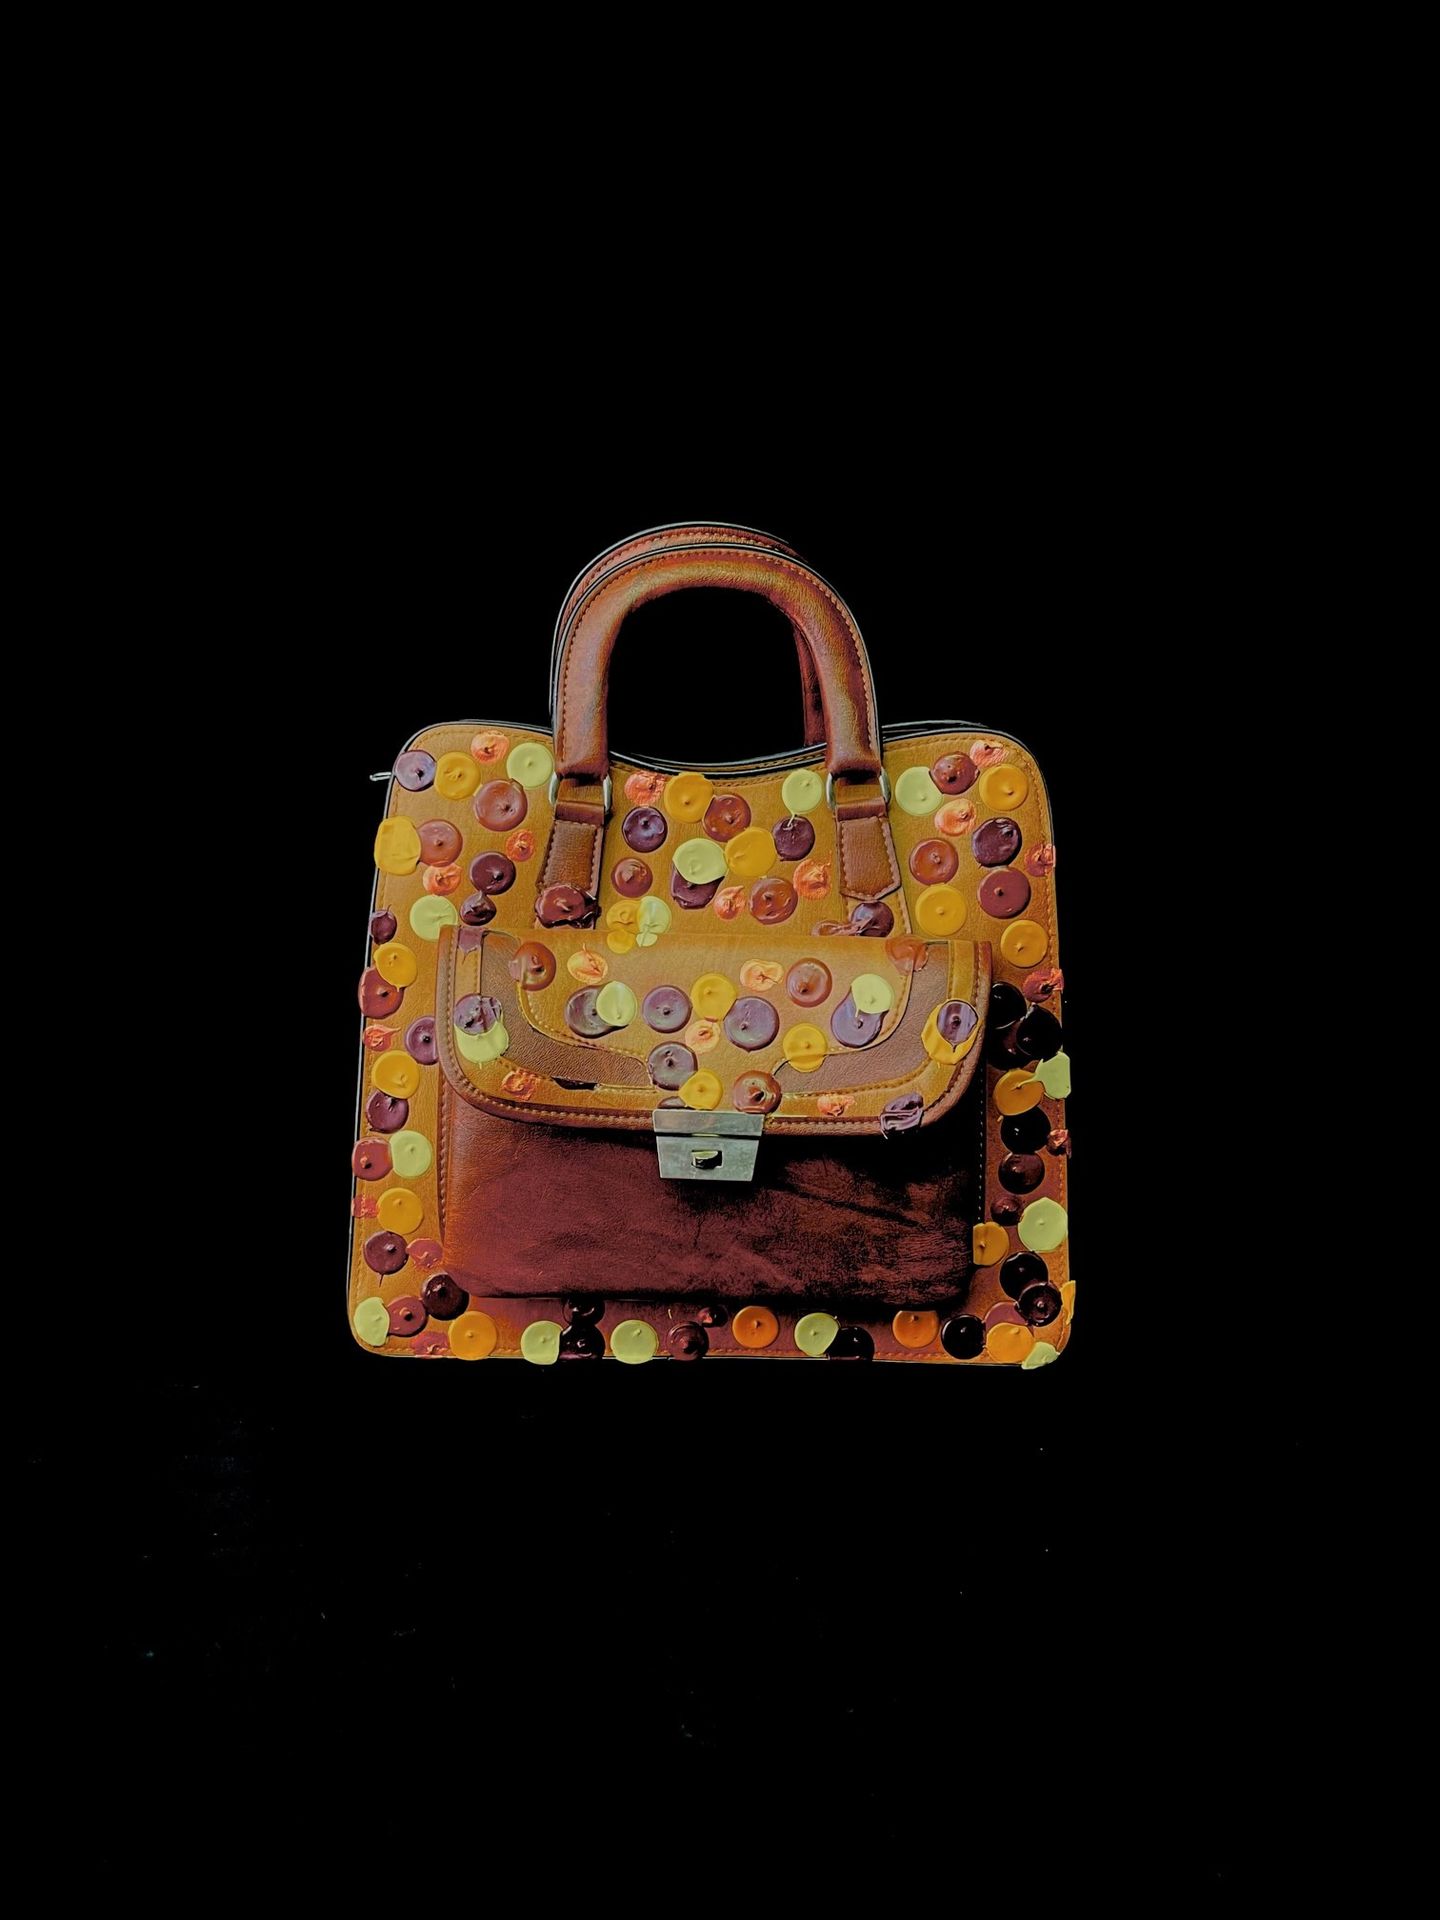 Eduardo GUELFENBEIN Pointilleux" bag

Vintage 1970 bag in camel skai with interv&hellip;